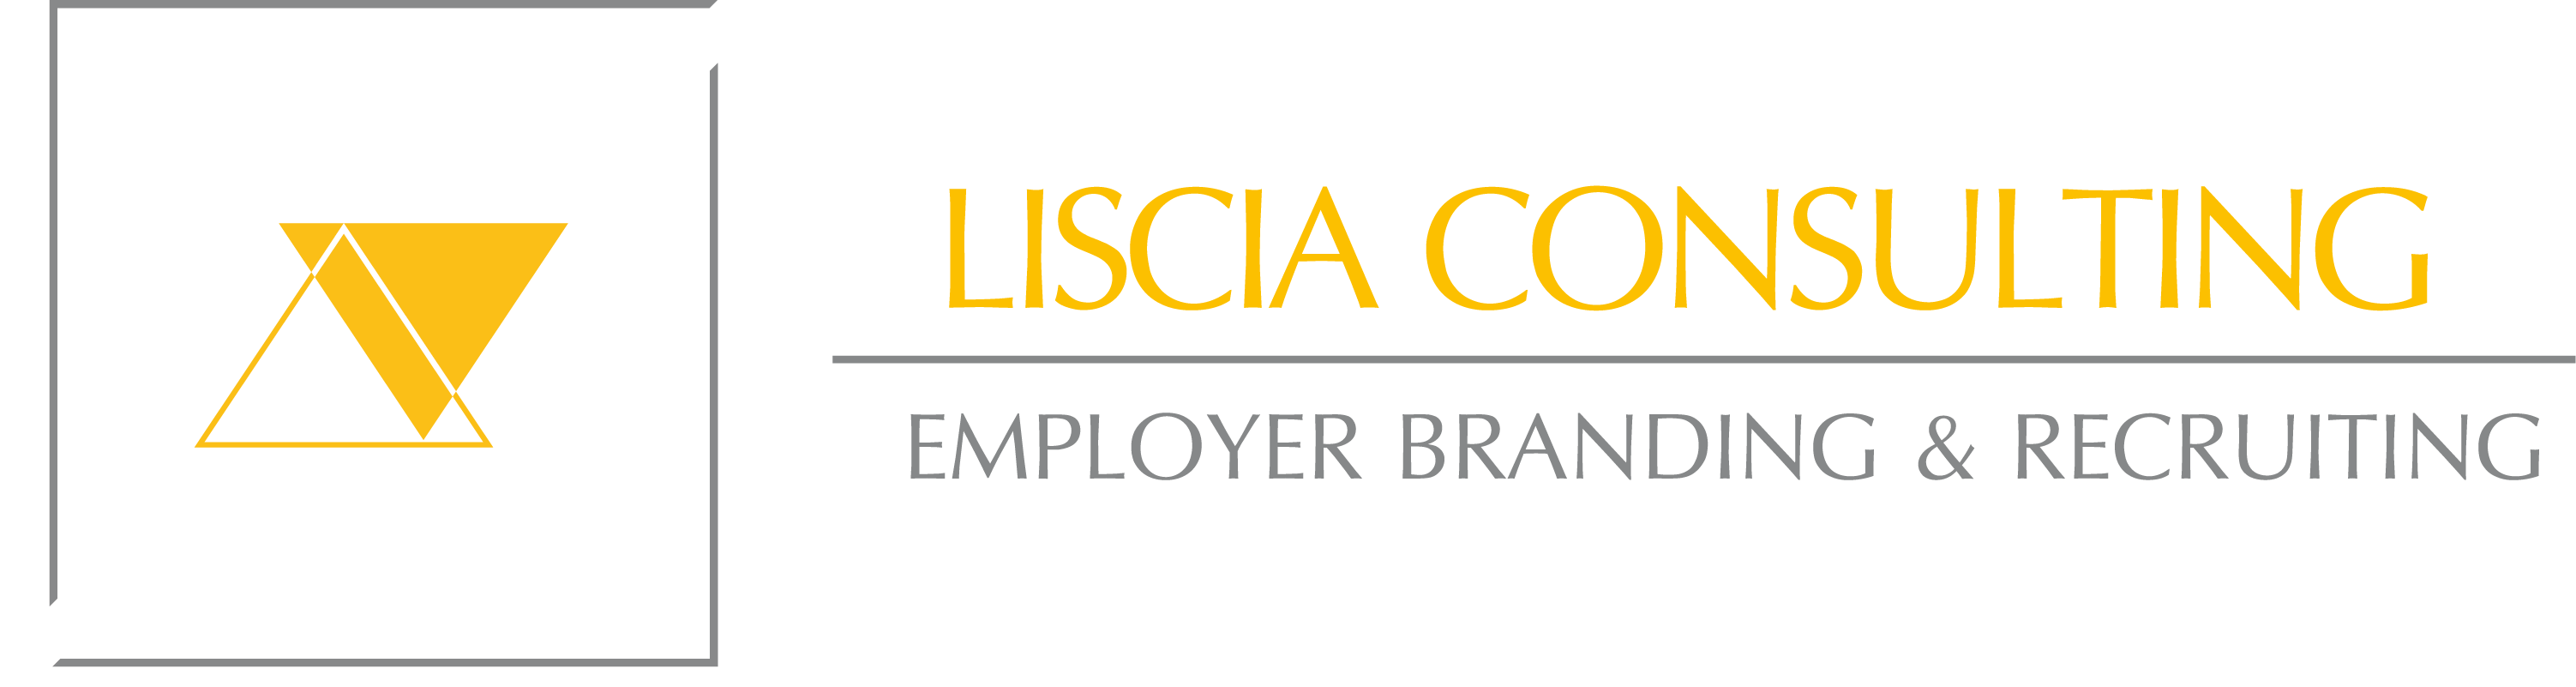 Liscia Consulting Employer Branding & Recruiting